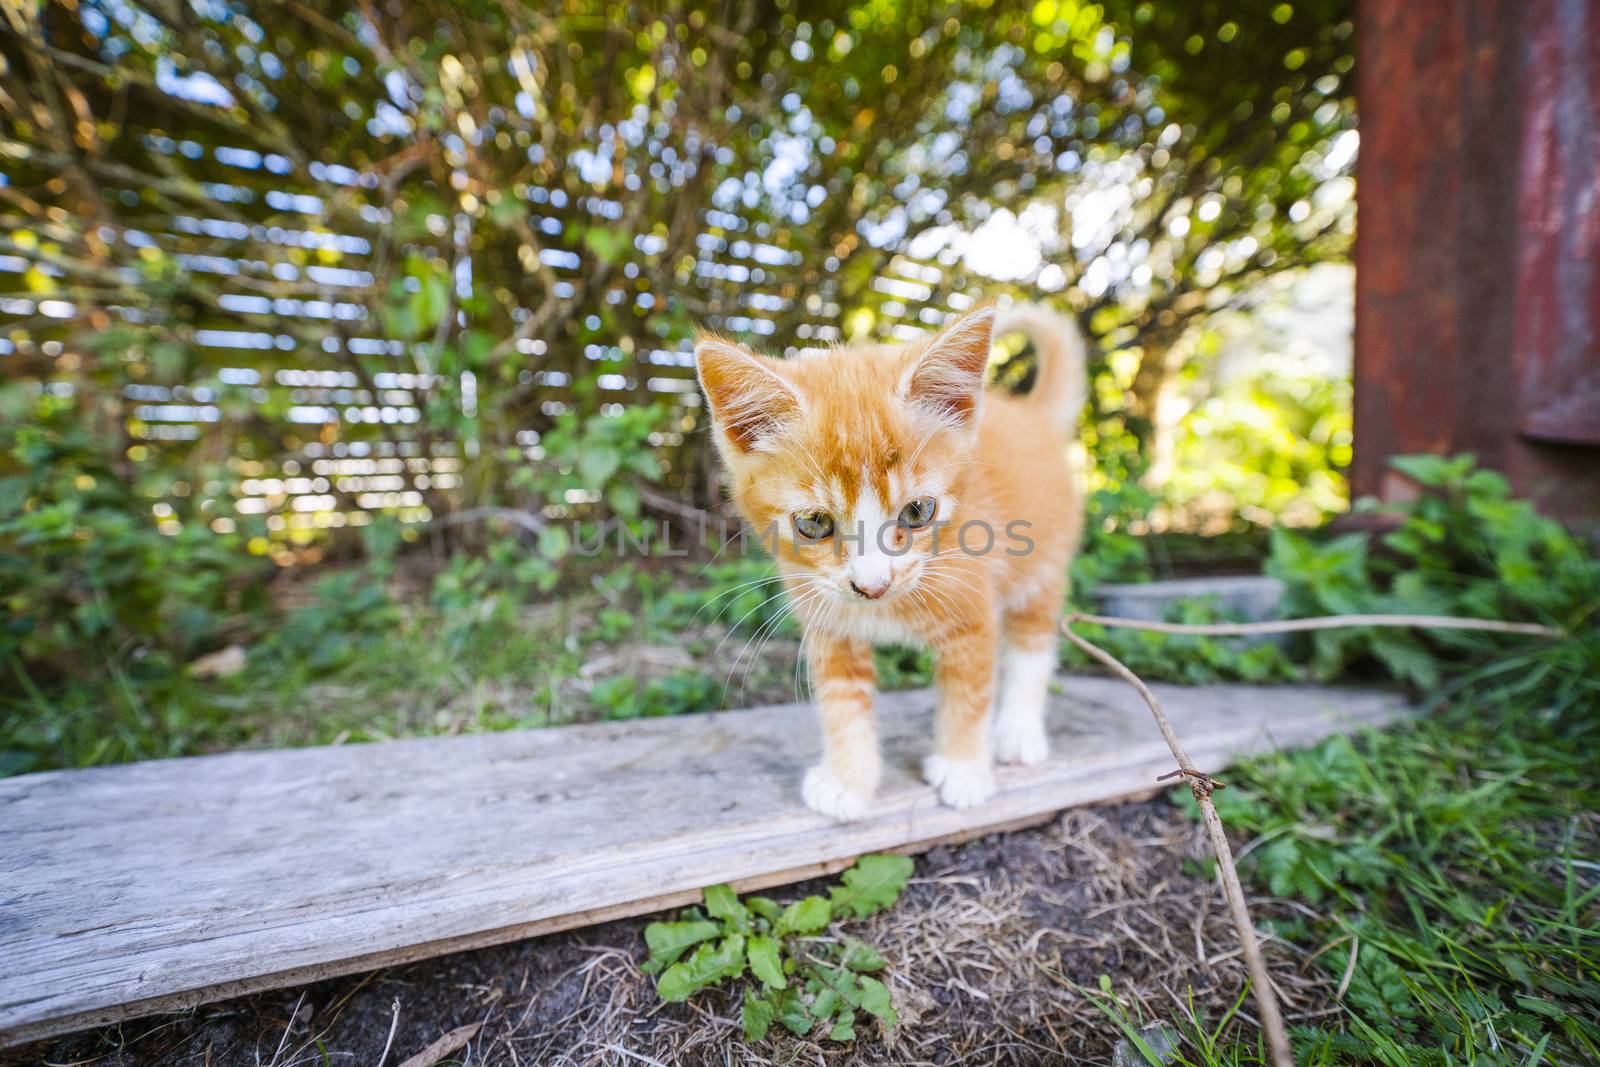 Cute kitten in orange color walking around in a garden in the springtime